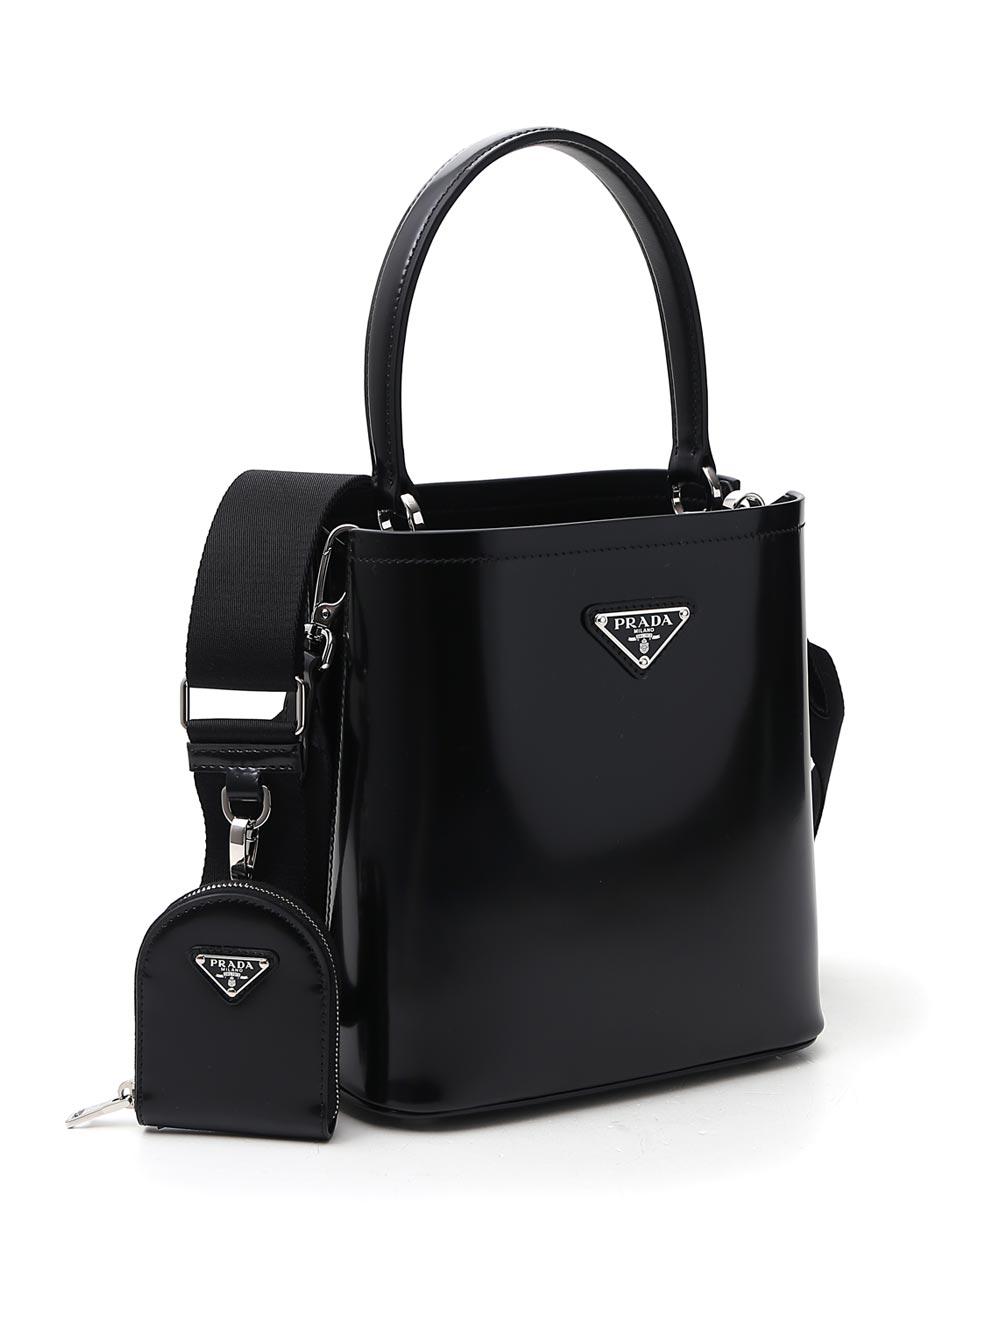 Prada Shoulder Bag Pouch Black 12 x 19 x 7cm Novelty Official